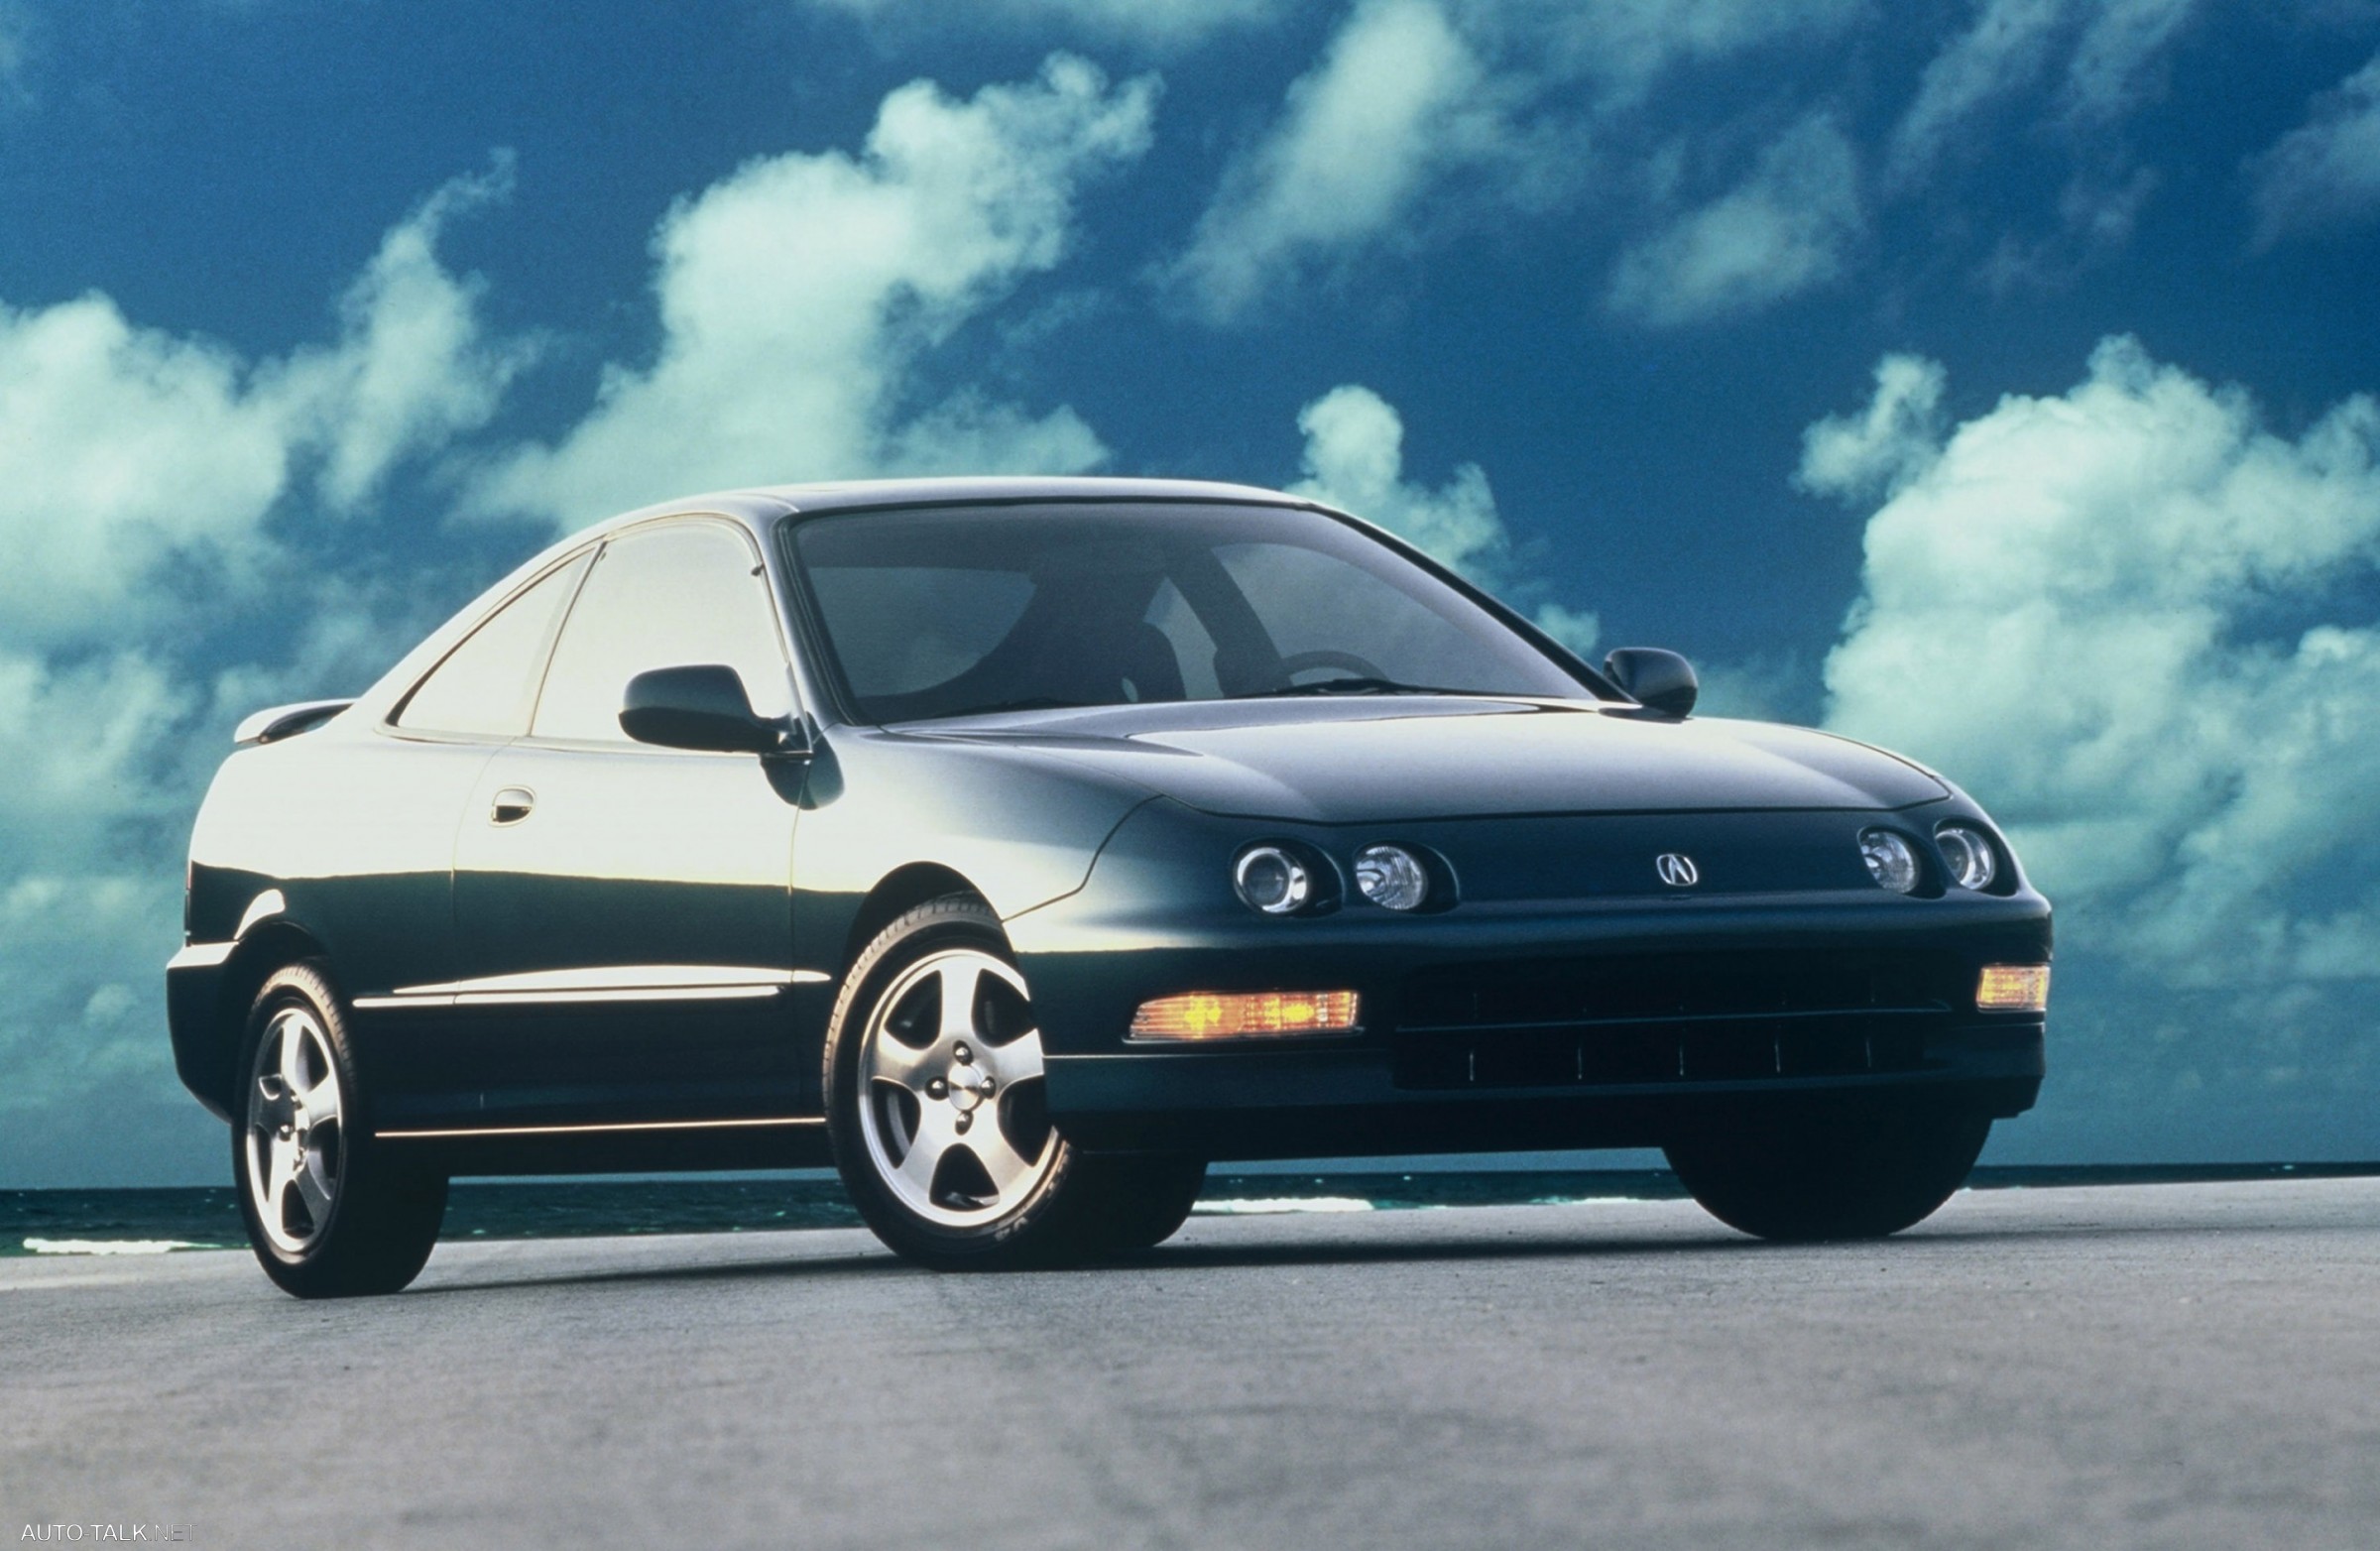 1995 Acura Integra